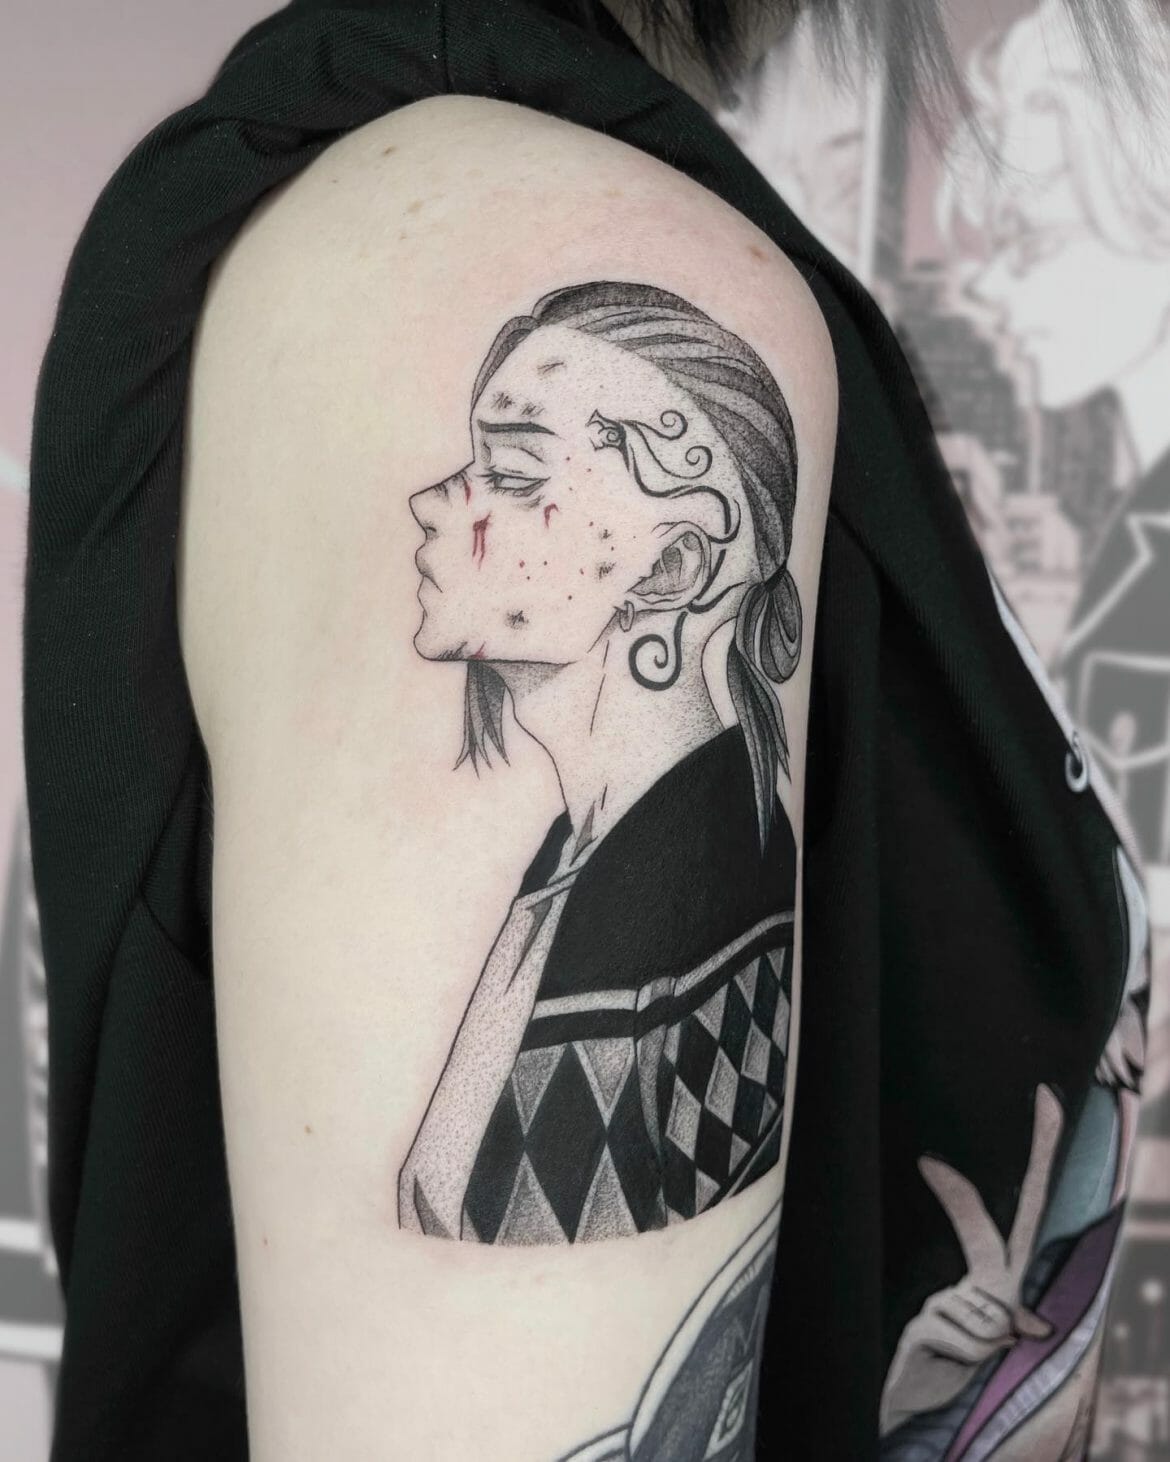 draken and mitsuya tattoo